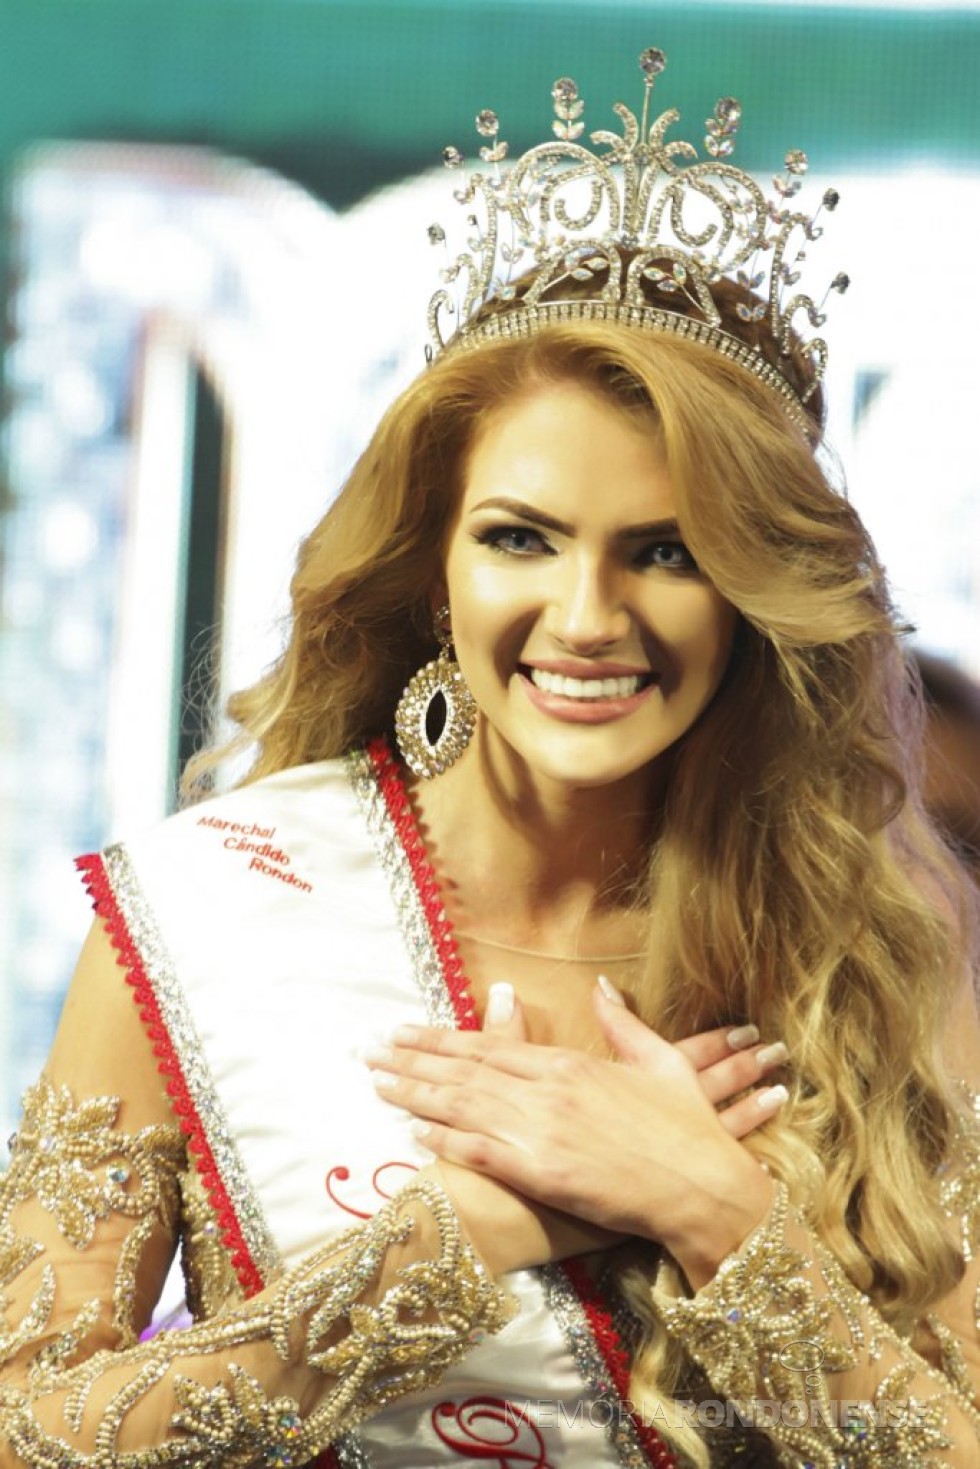 Aryala Stefani Wommer eleita Miss Marechal Rondon 2016, em 07 de maio de 2016. 
Imagem: Acervo Imprensa-PM-MCR
Crédito: Ademir Herrmann - FOTO 8 -
